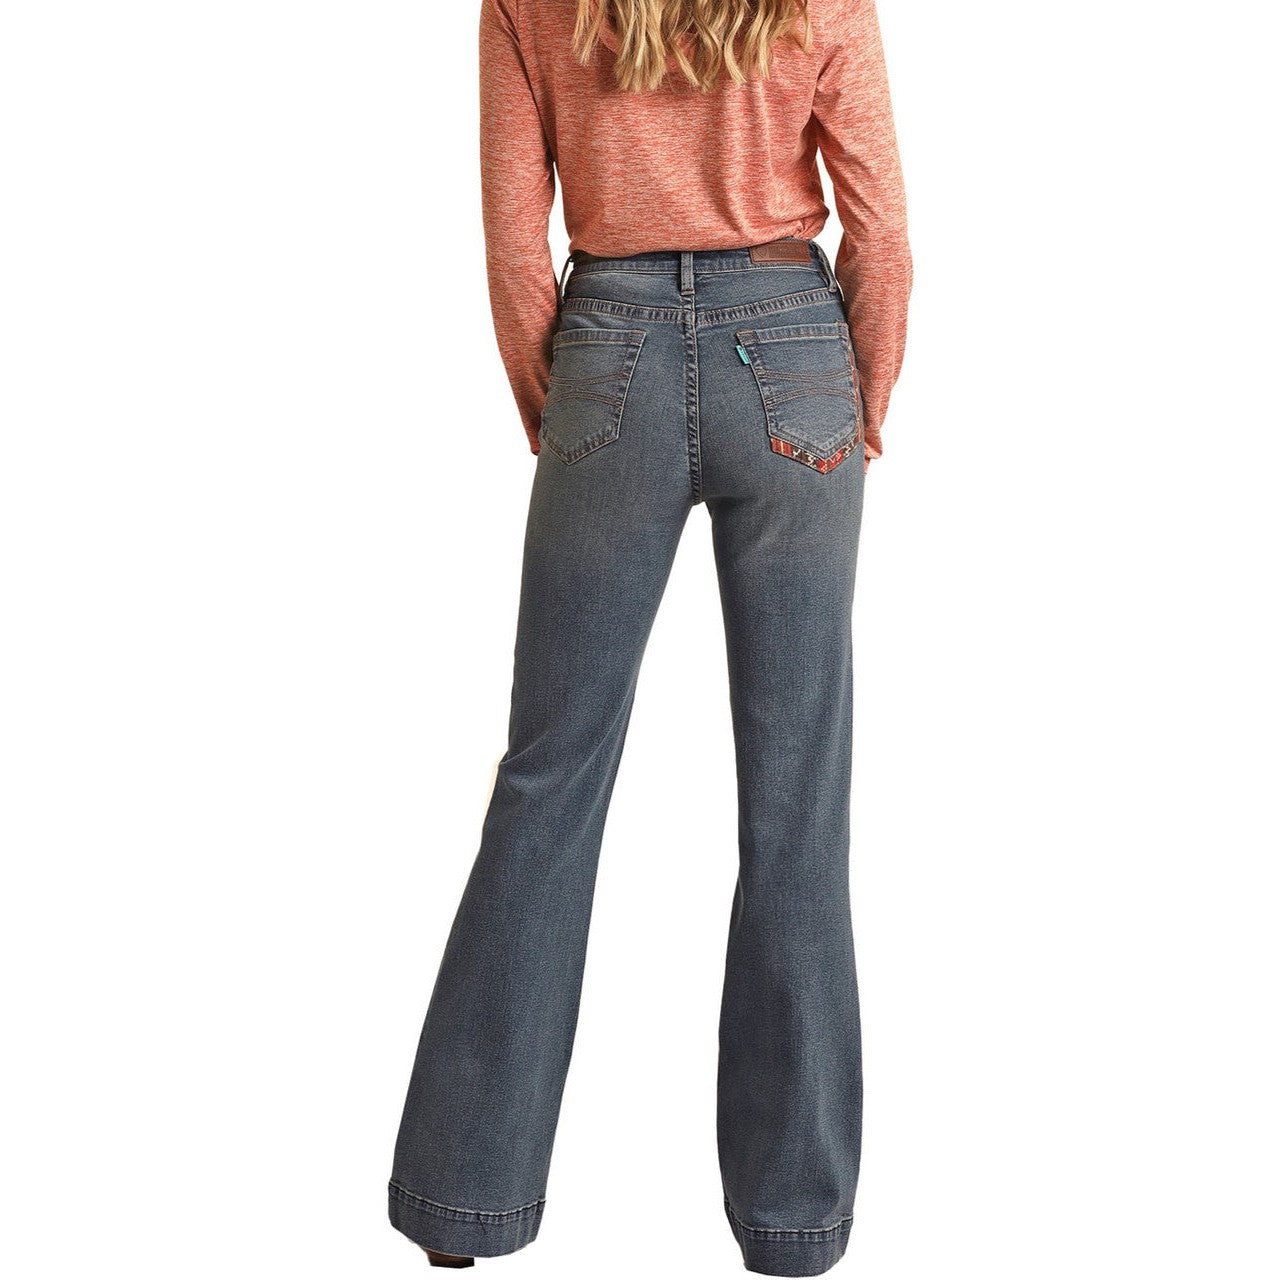 Rock & Roll Hooey Women's High Rise Trouser Jeans - Medium Vintage